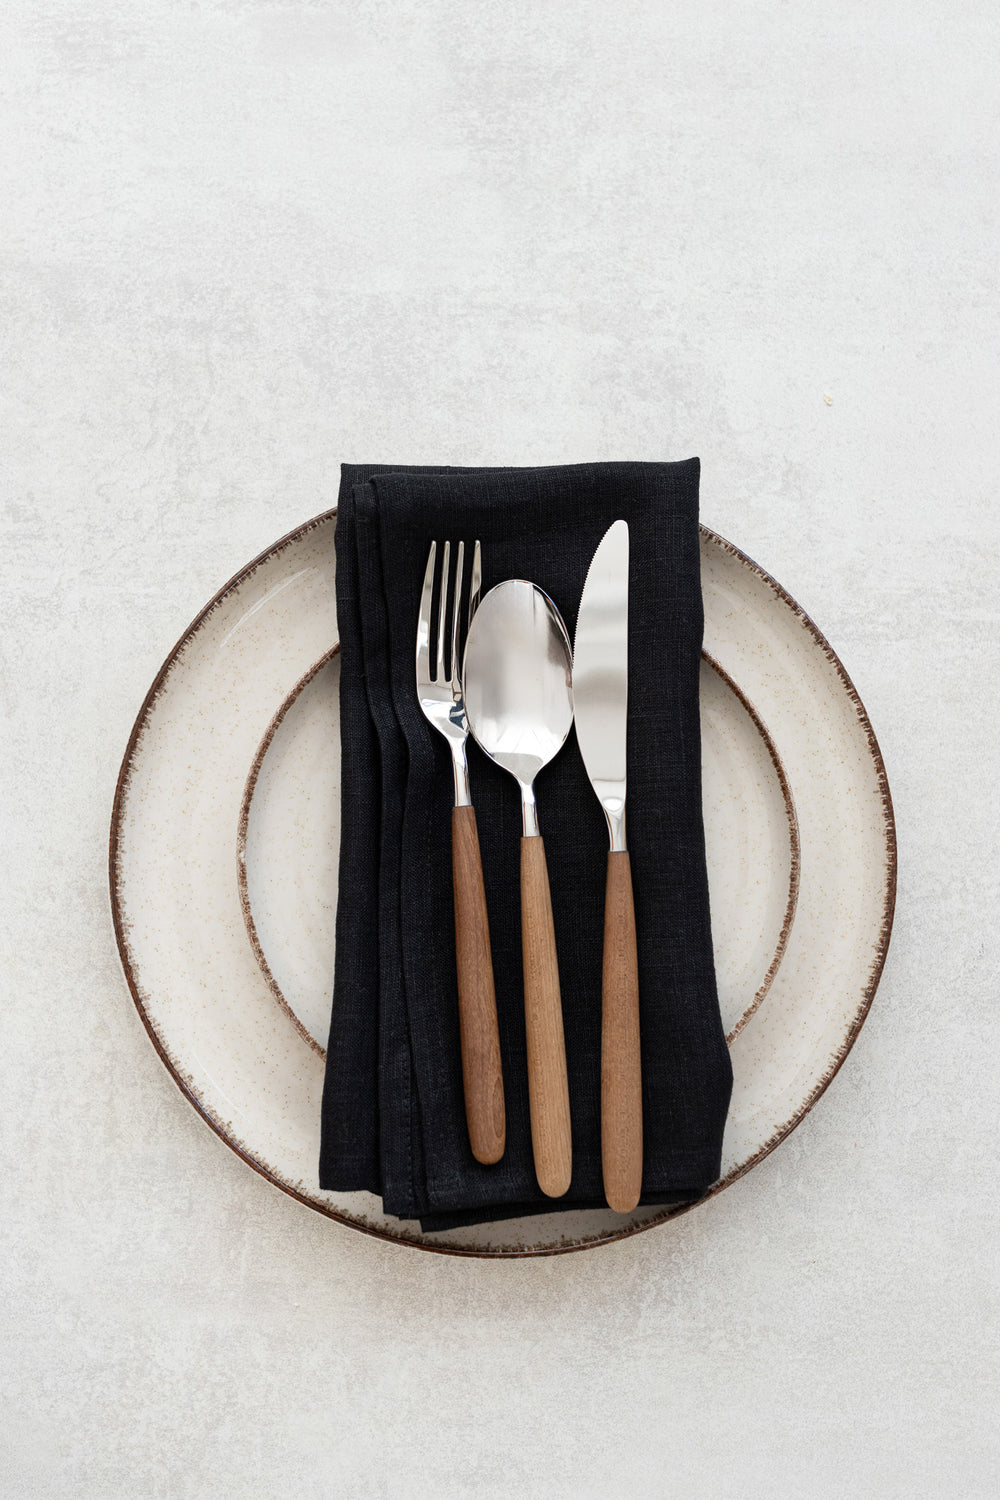 Black linen napkins served with fork and knife